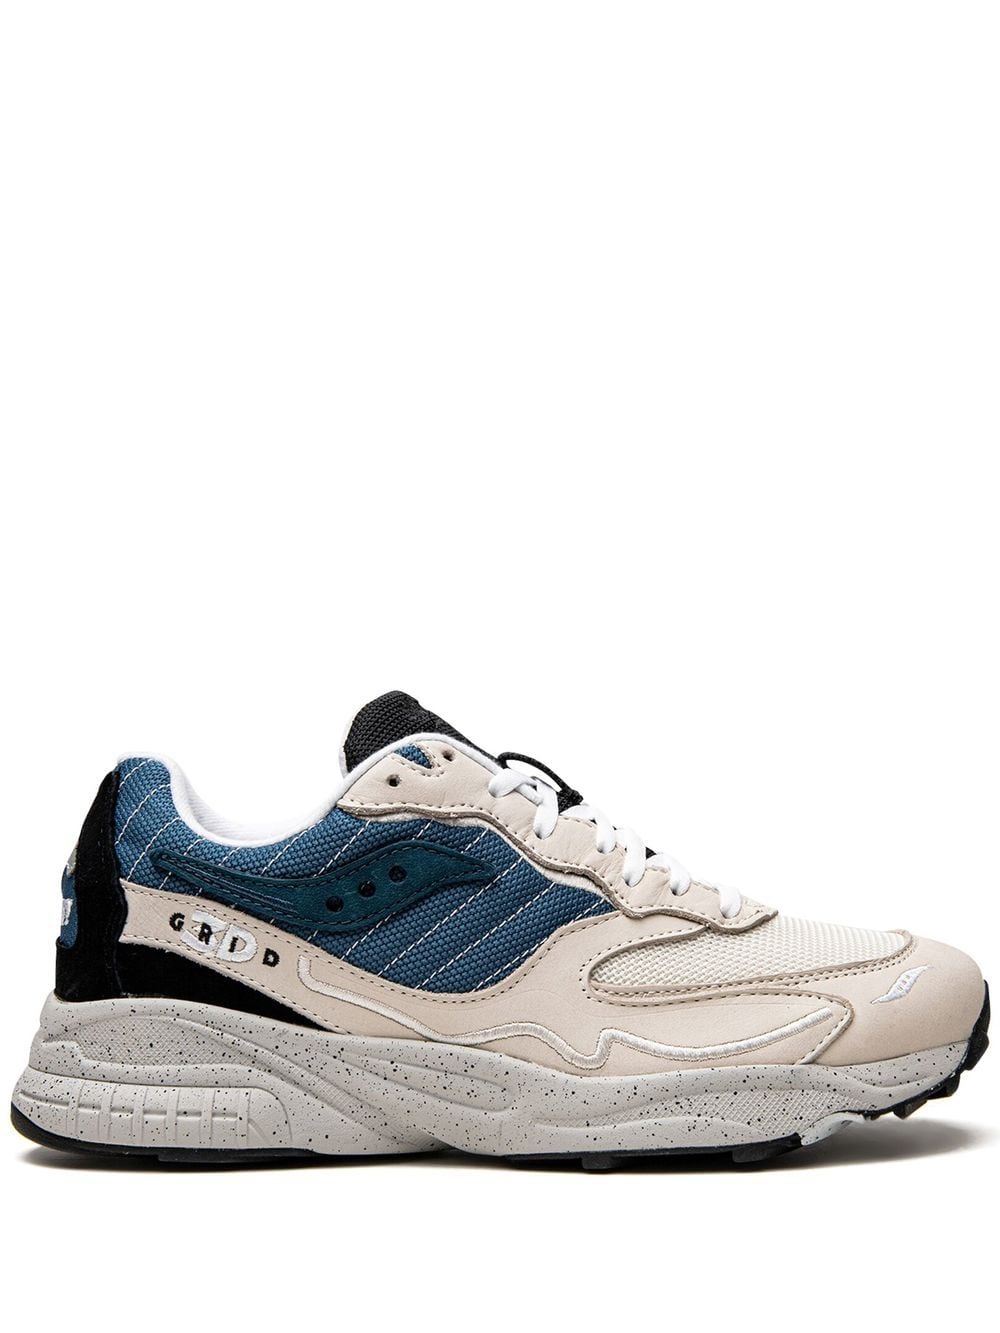 saucony 3d grid hurricane sneakers - cream/blue